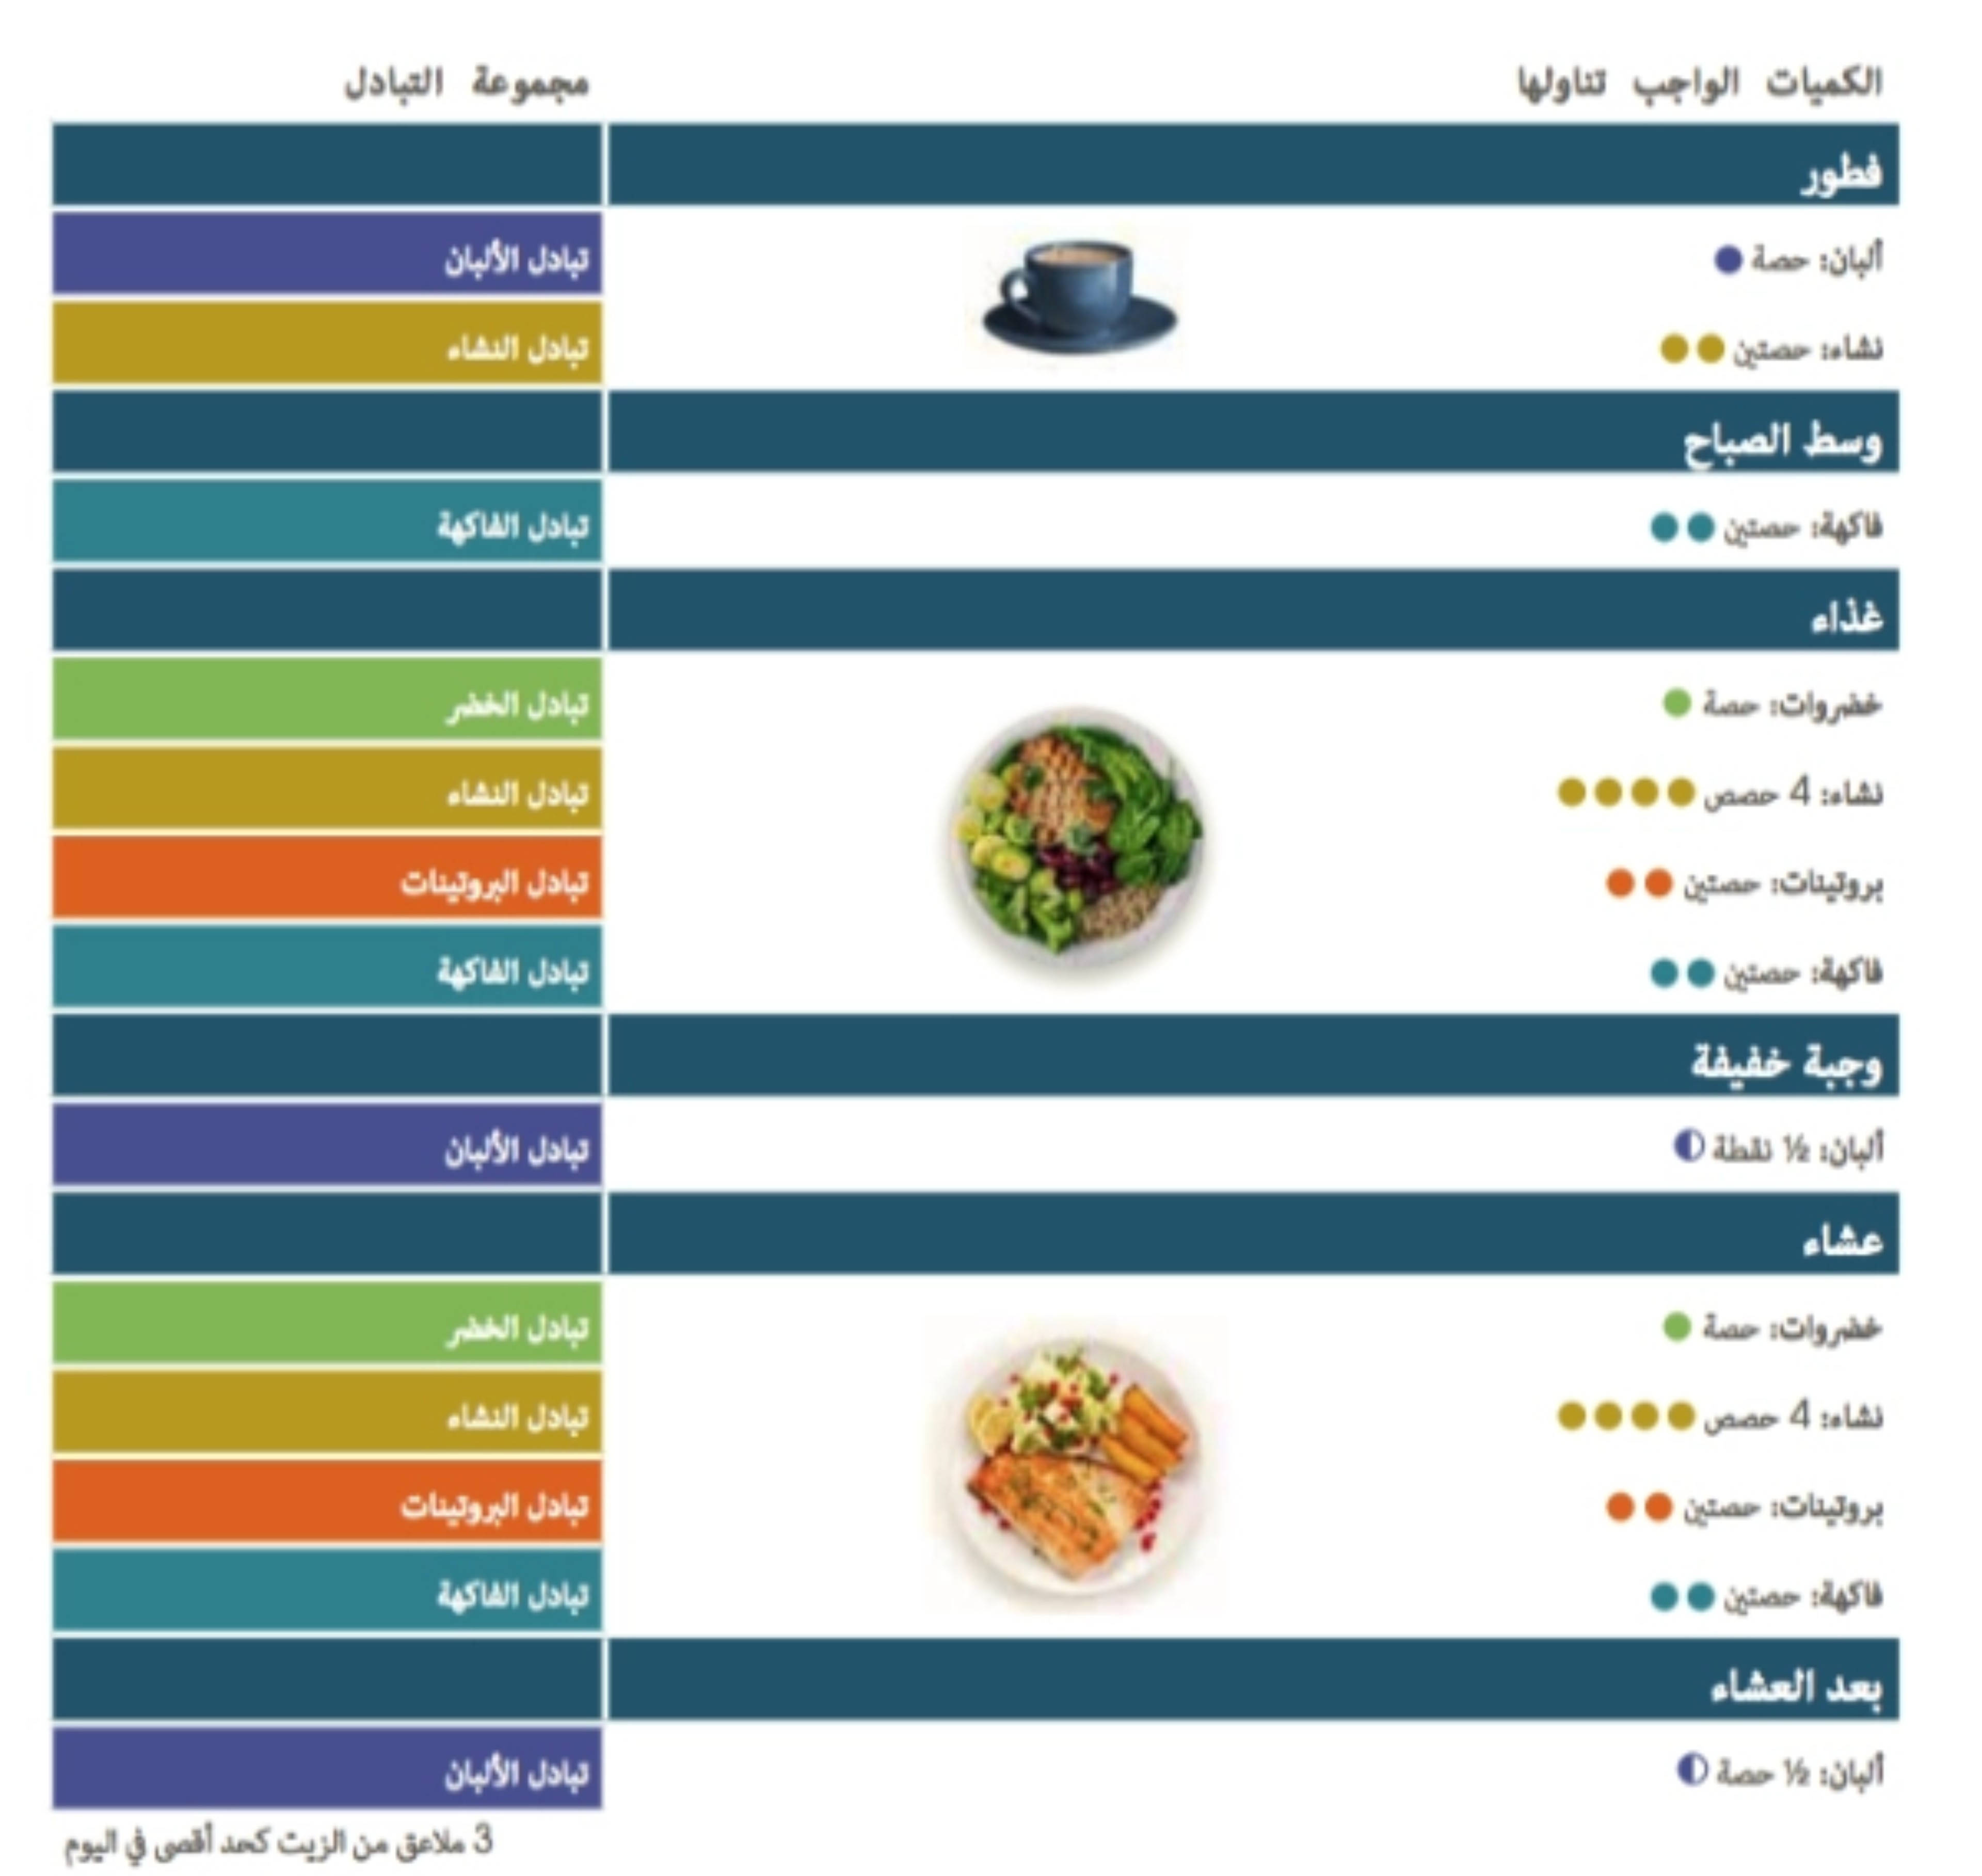 Dieta 1500 caloras - arabe